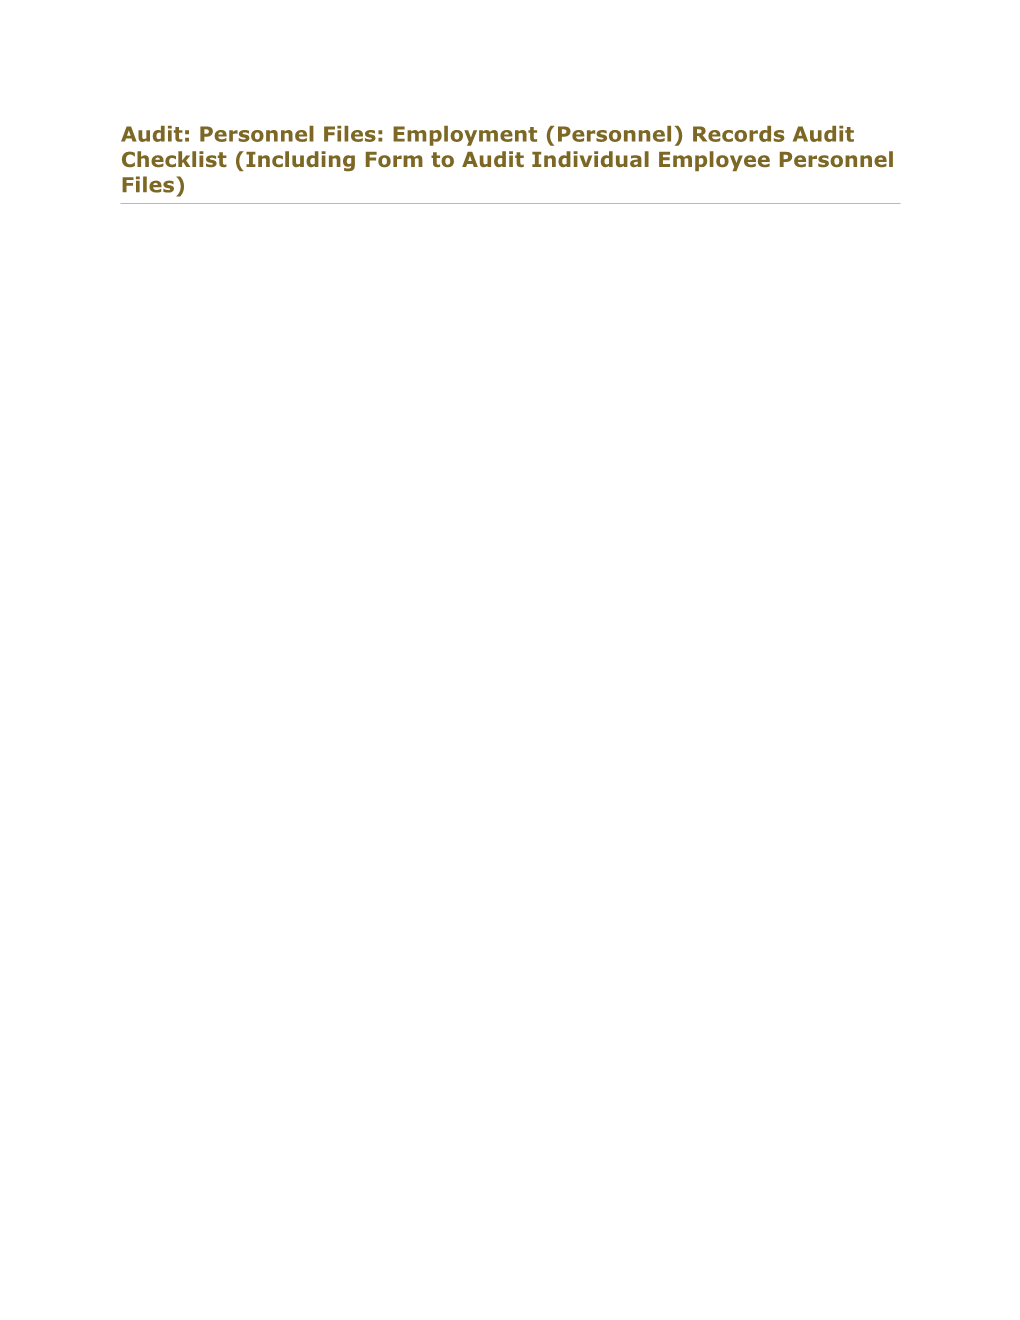 Audit: Personnel Files: Employment (Personnel) Records Audit Checklist (Including Form